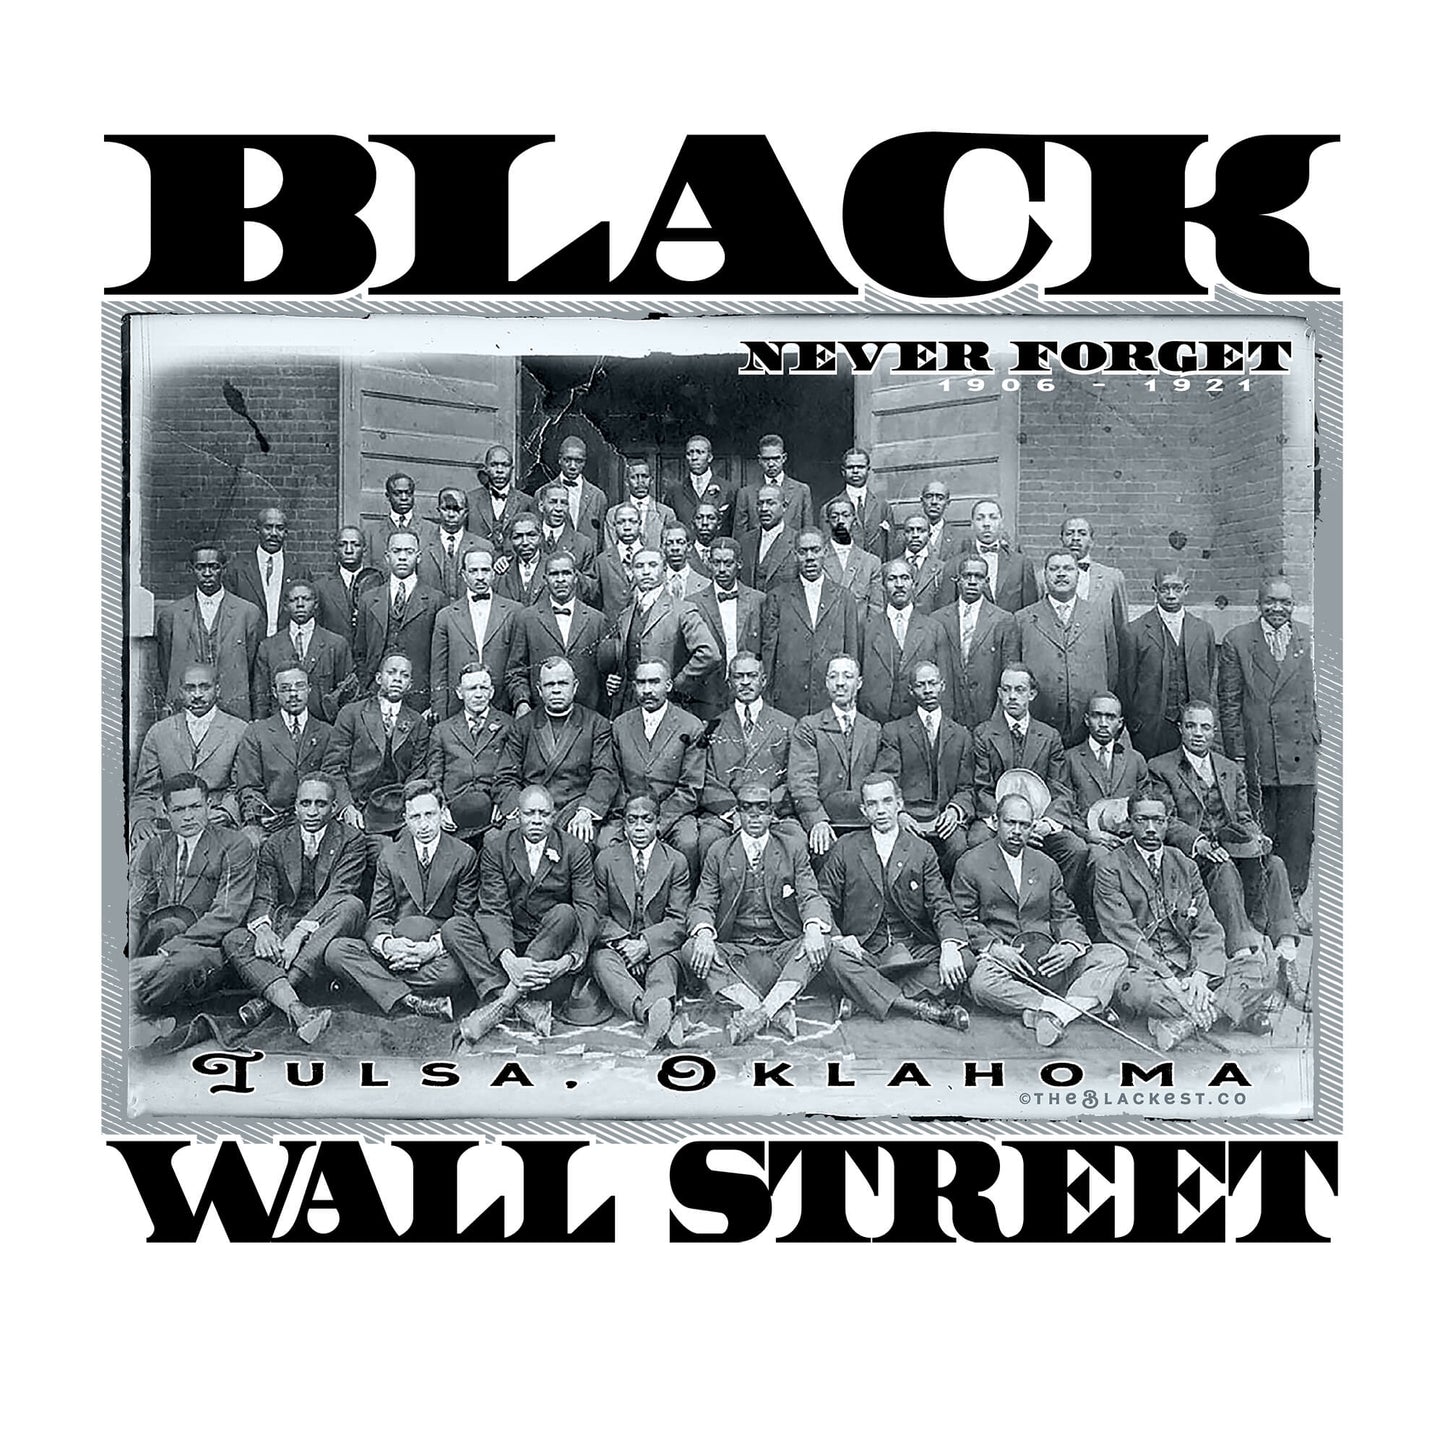 Black Wall Street Vintage History Unisex T-Shirt